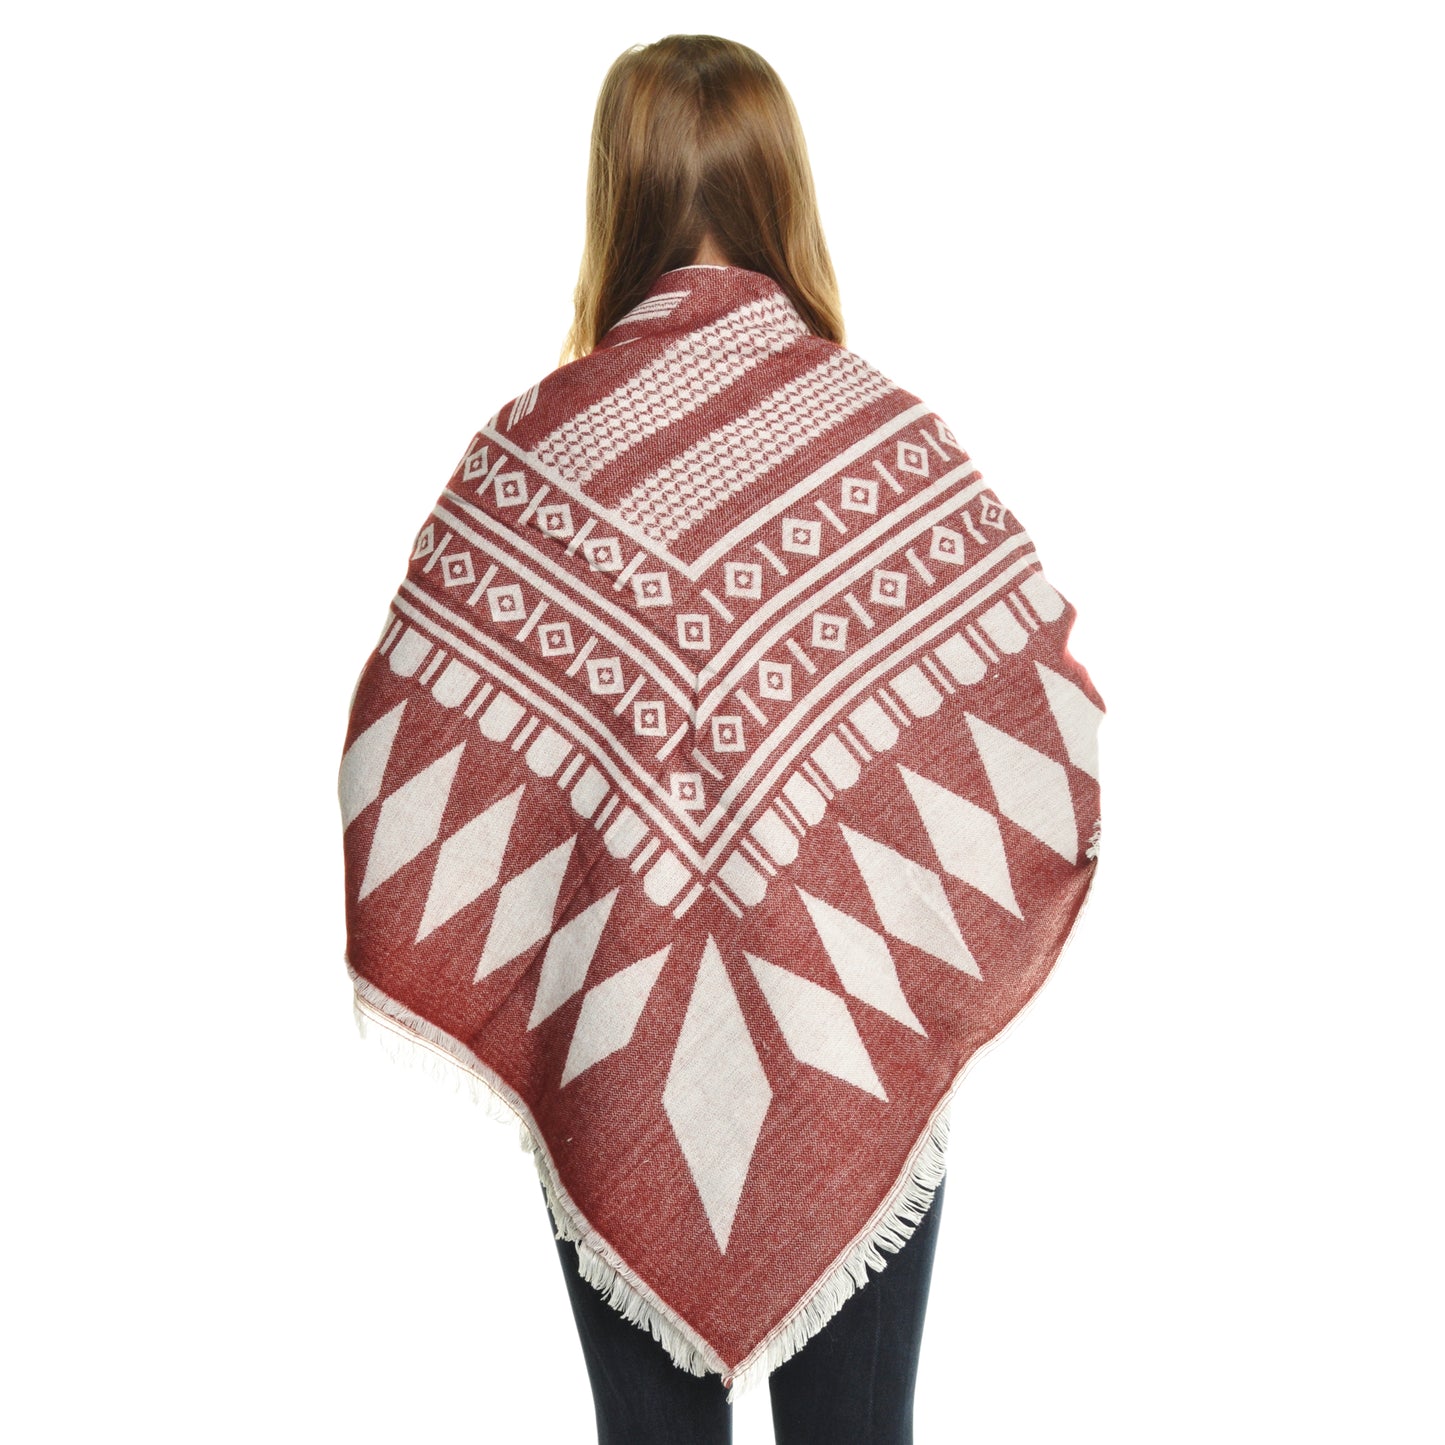 Tribal Print Blanket Scarf with Fringe Edge (1-Pack)